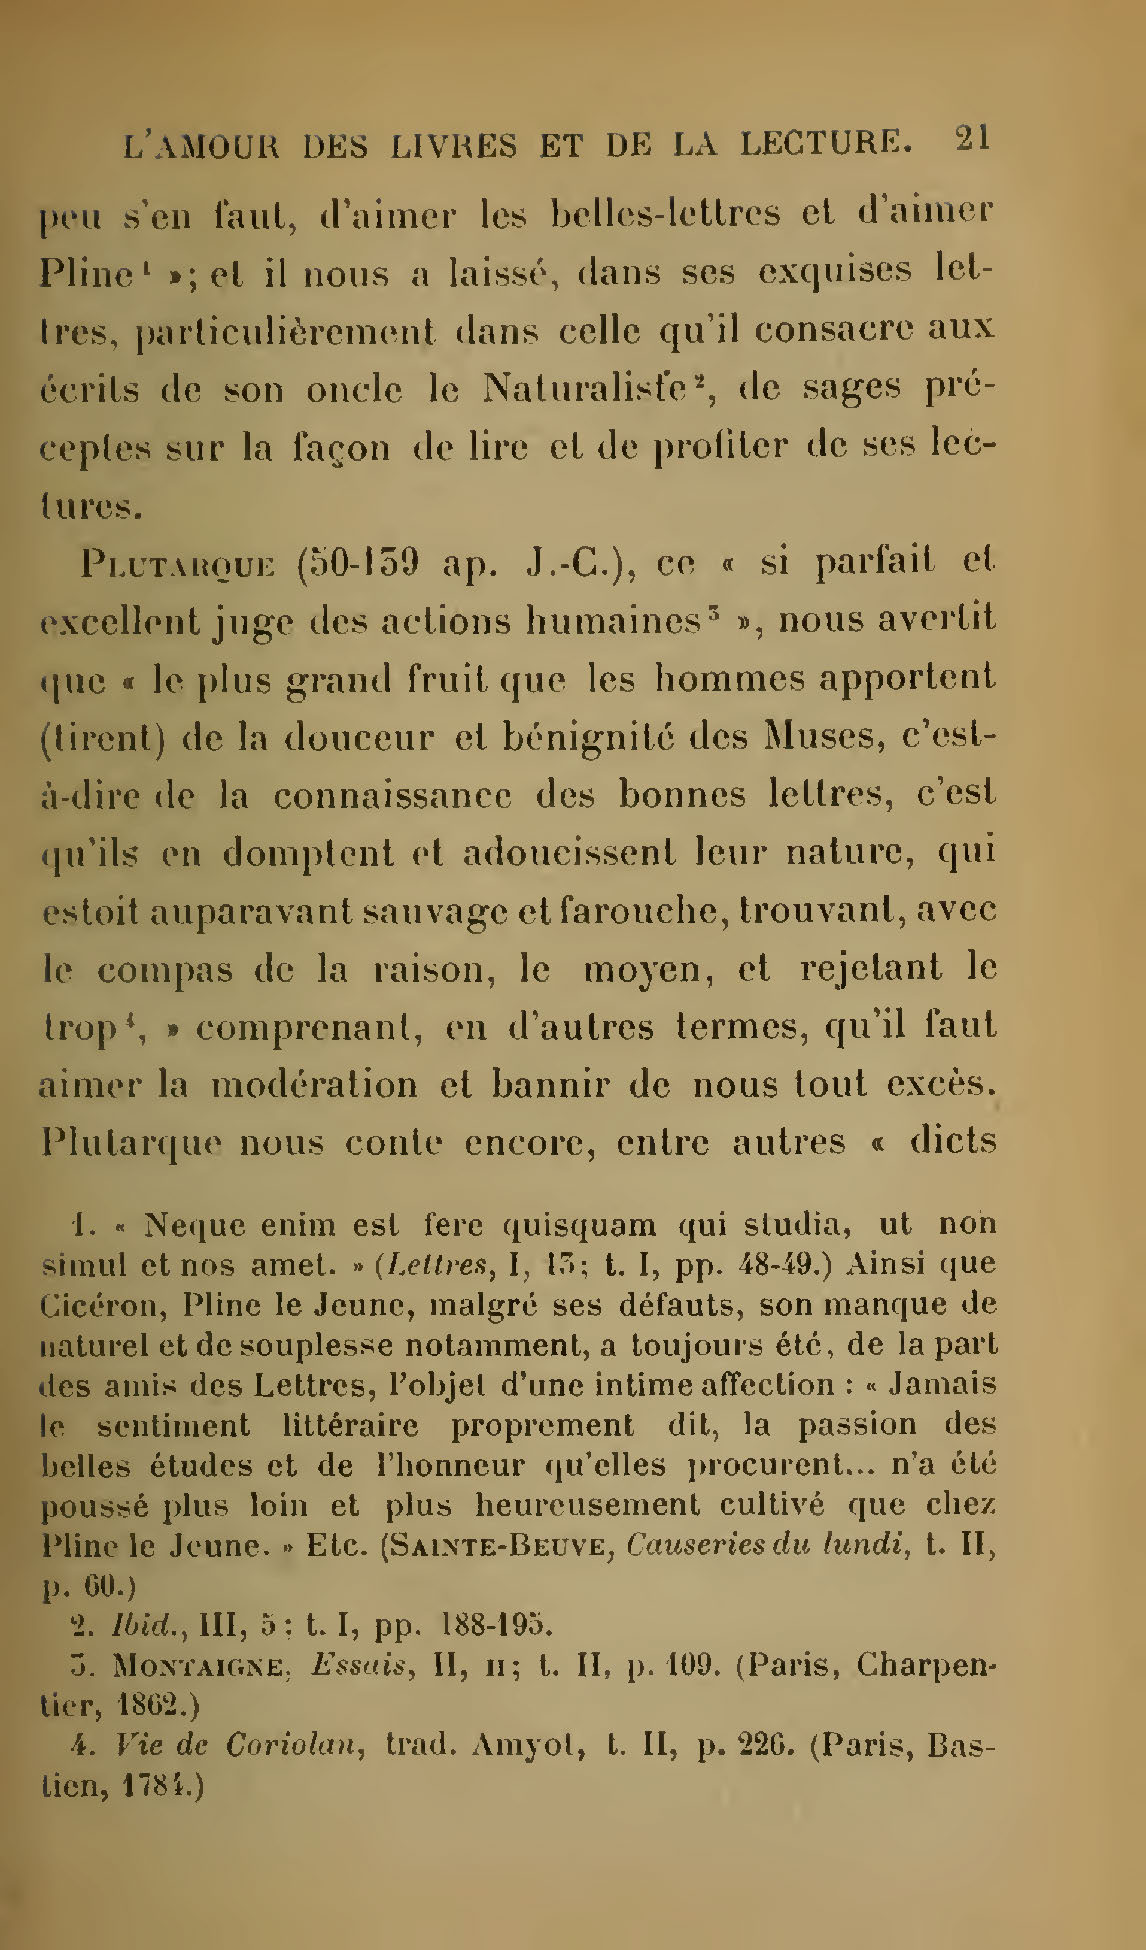 Albert Cim, Le Livre, t. I, p. 21.